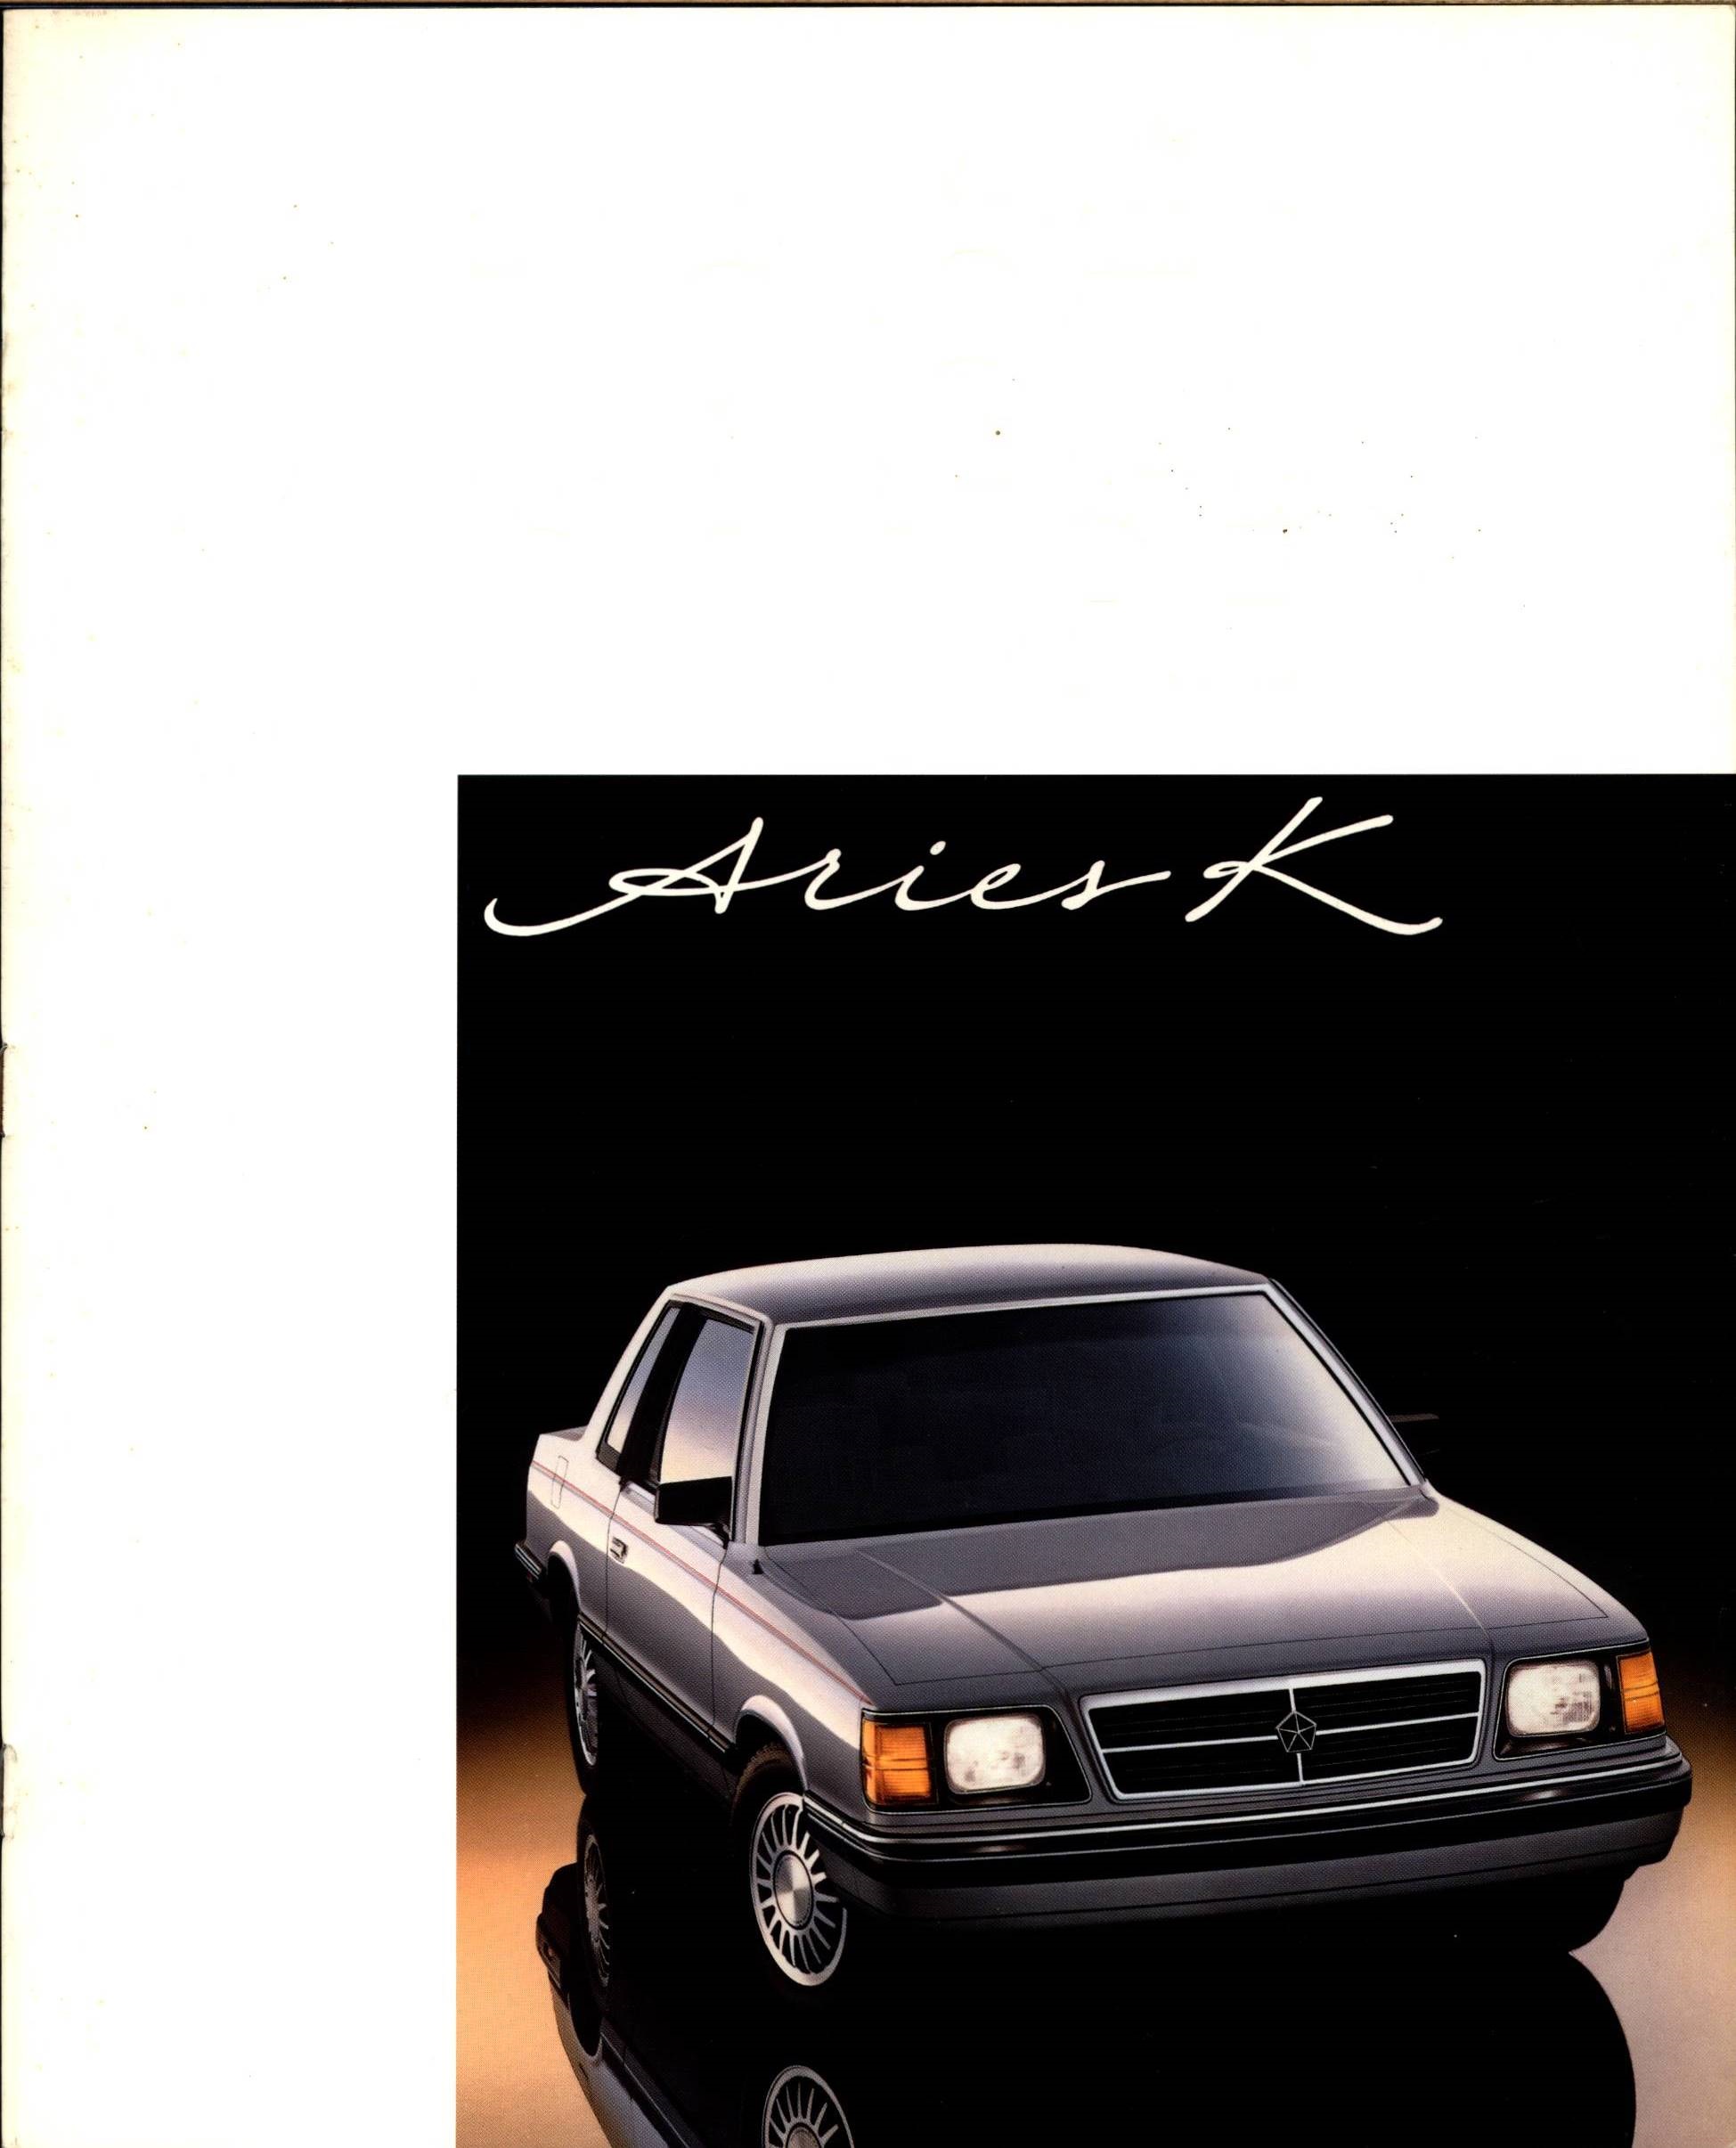 1987 Dodge Aries K Brochure (Rev) 01